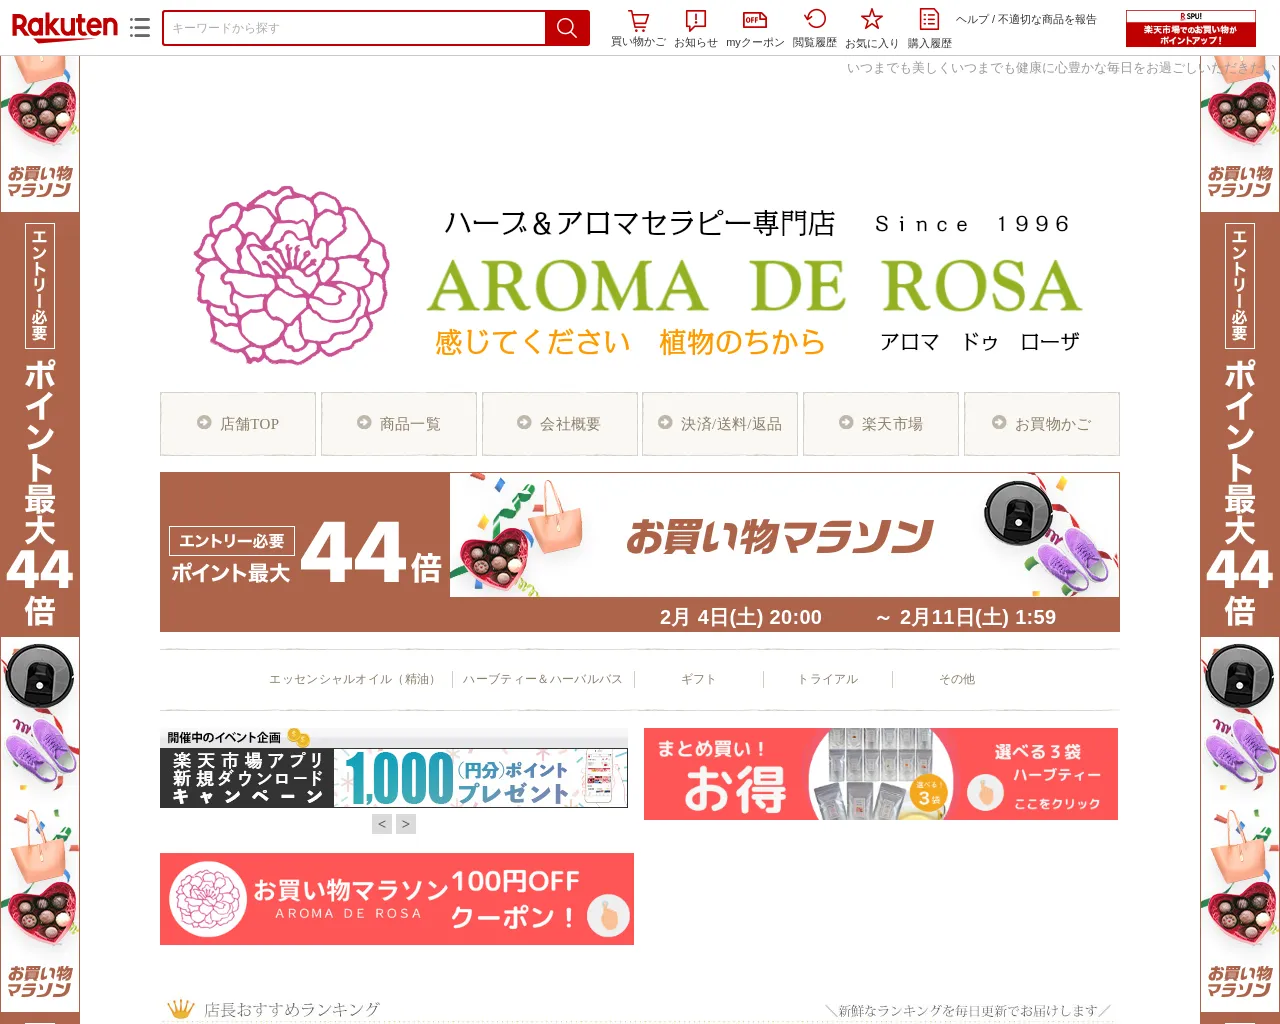 AROMA DE ROSA(アロマドゥローザ) site